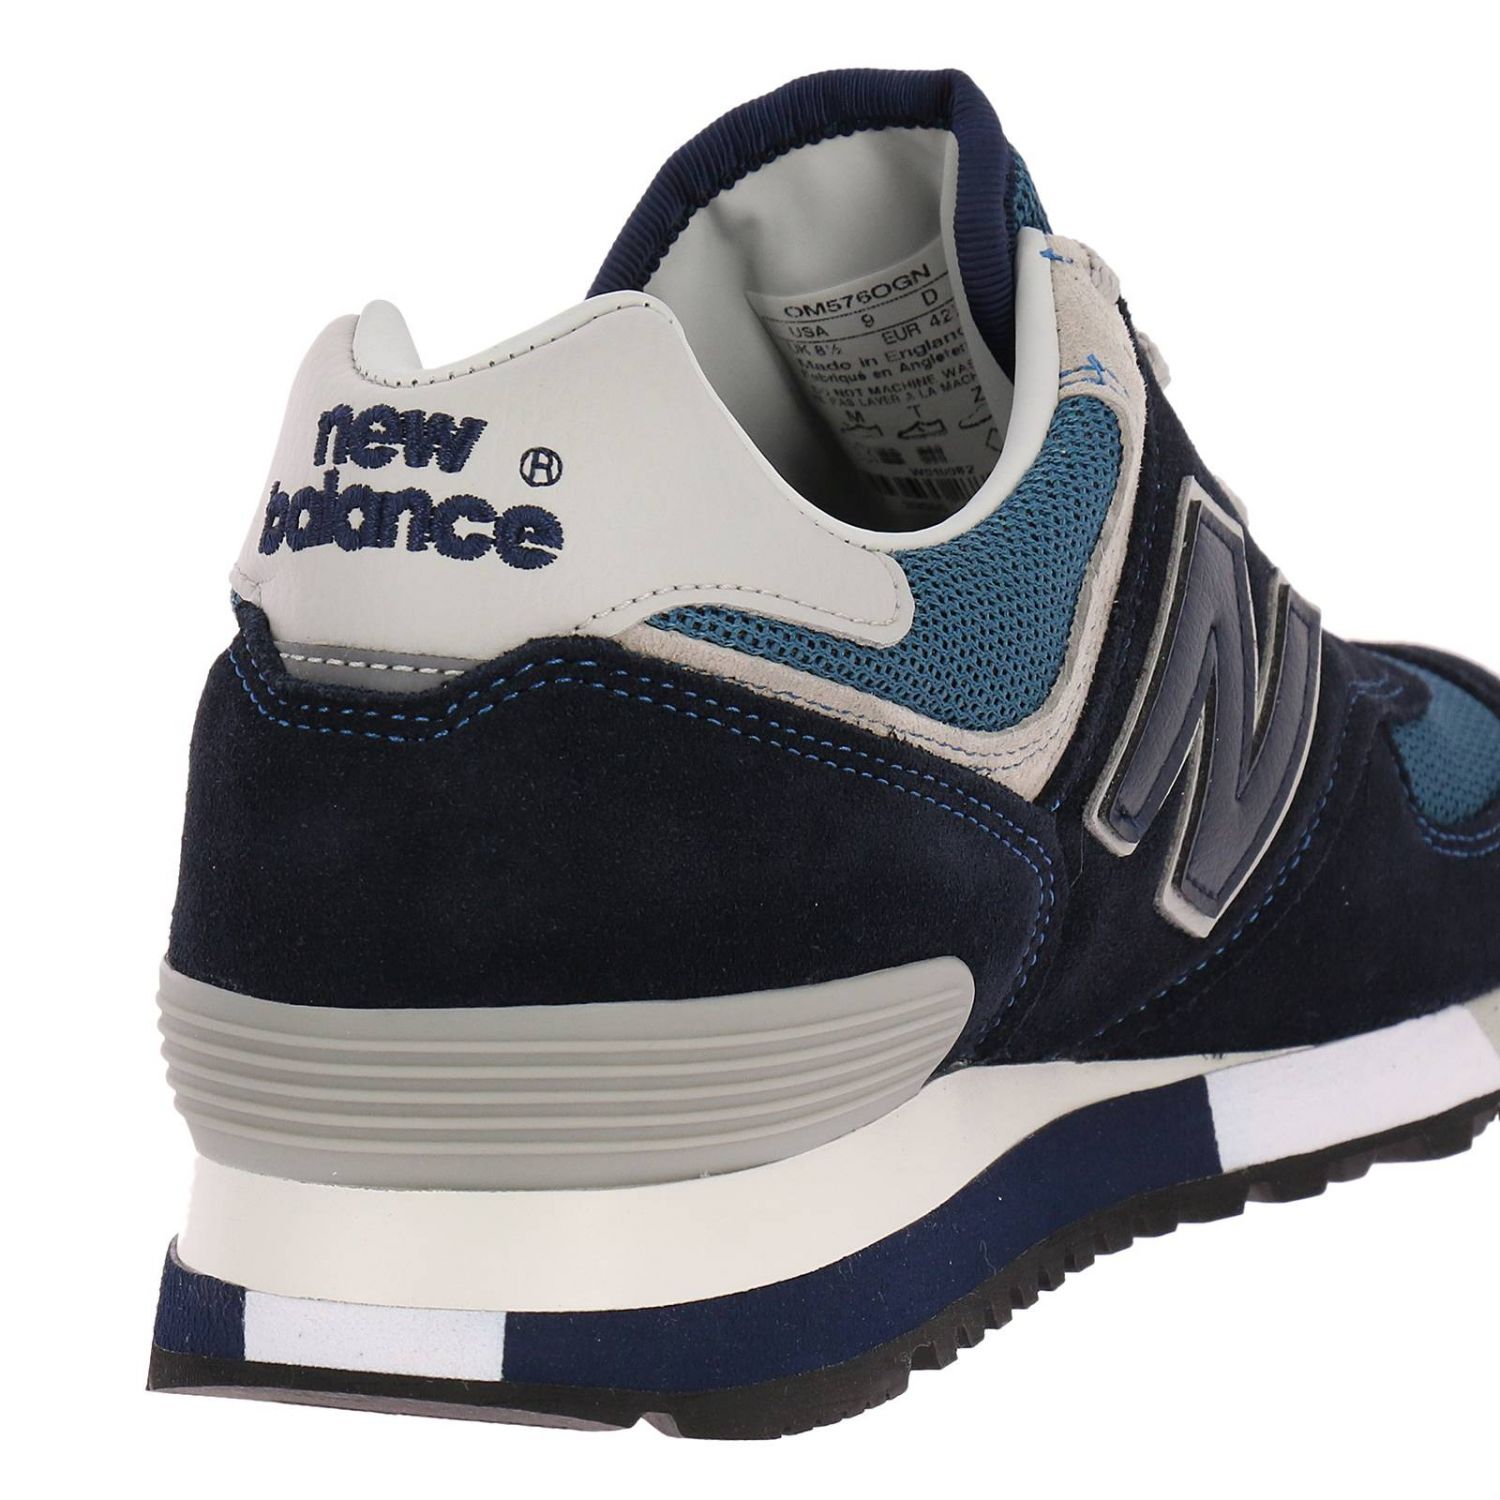 New Balance Outlet: Sneakers 576 in camoscio e micro rete ... اندر